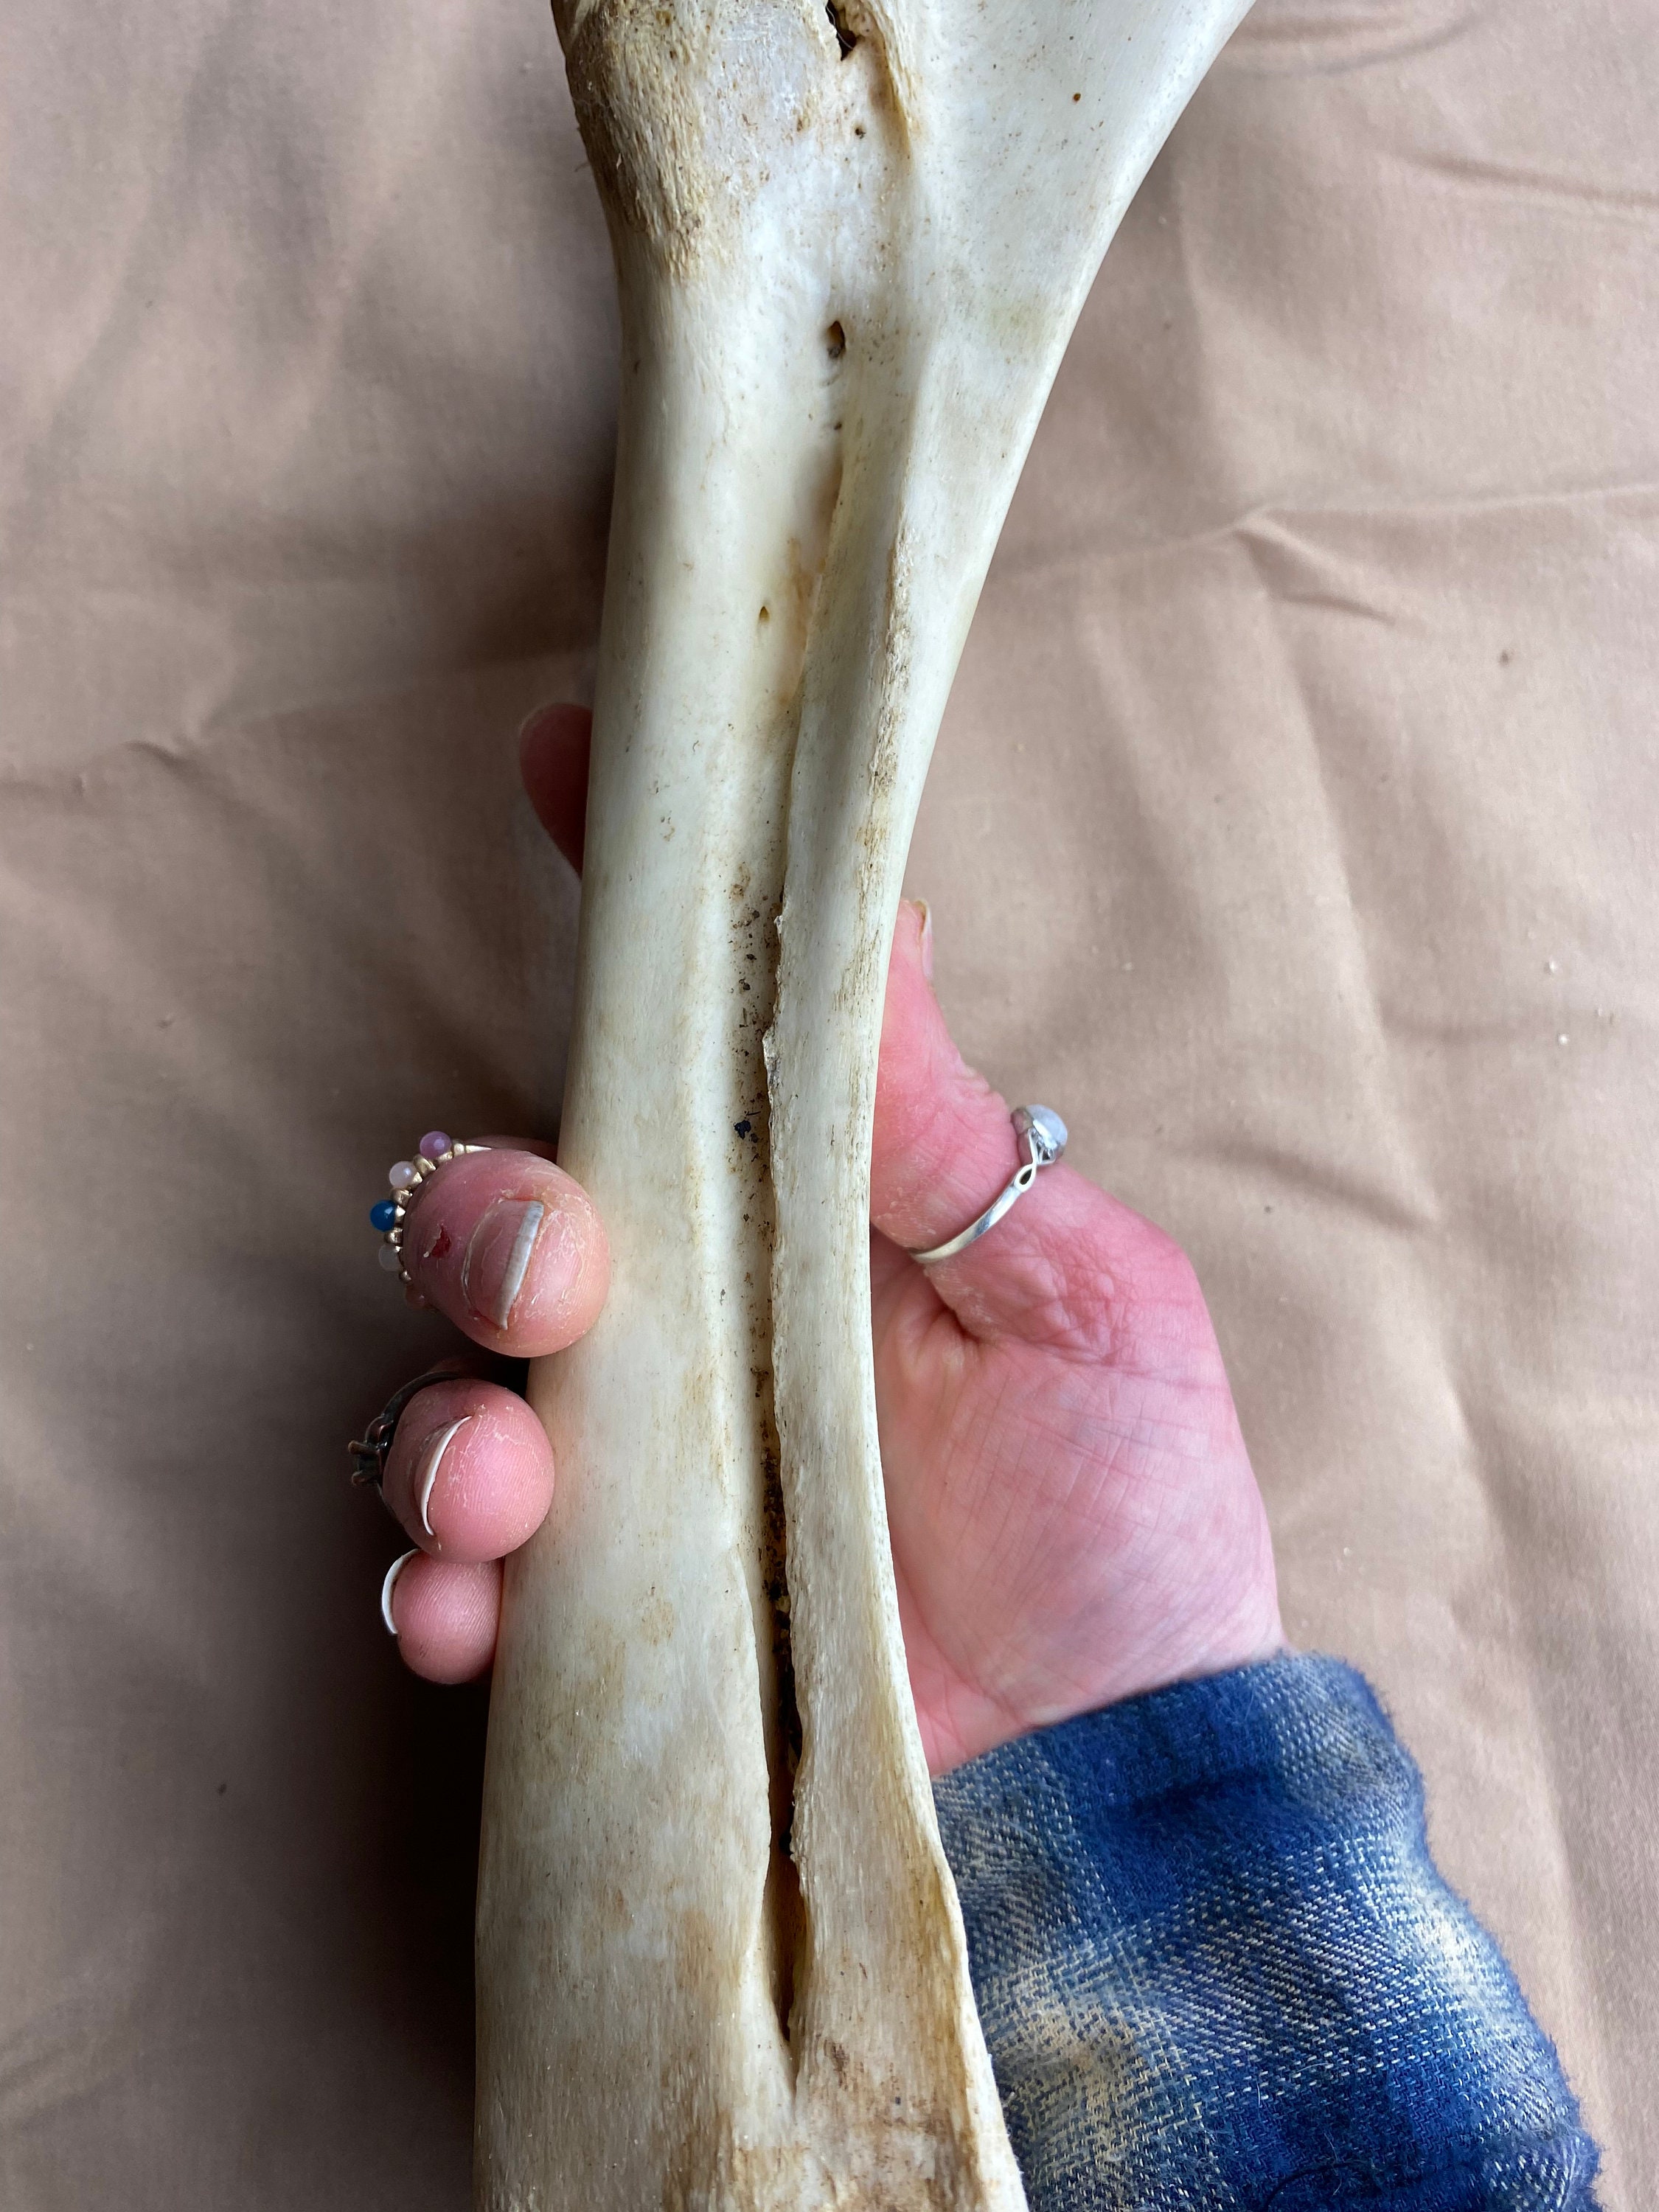 Real Human Tibia Bone Sword